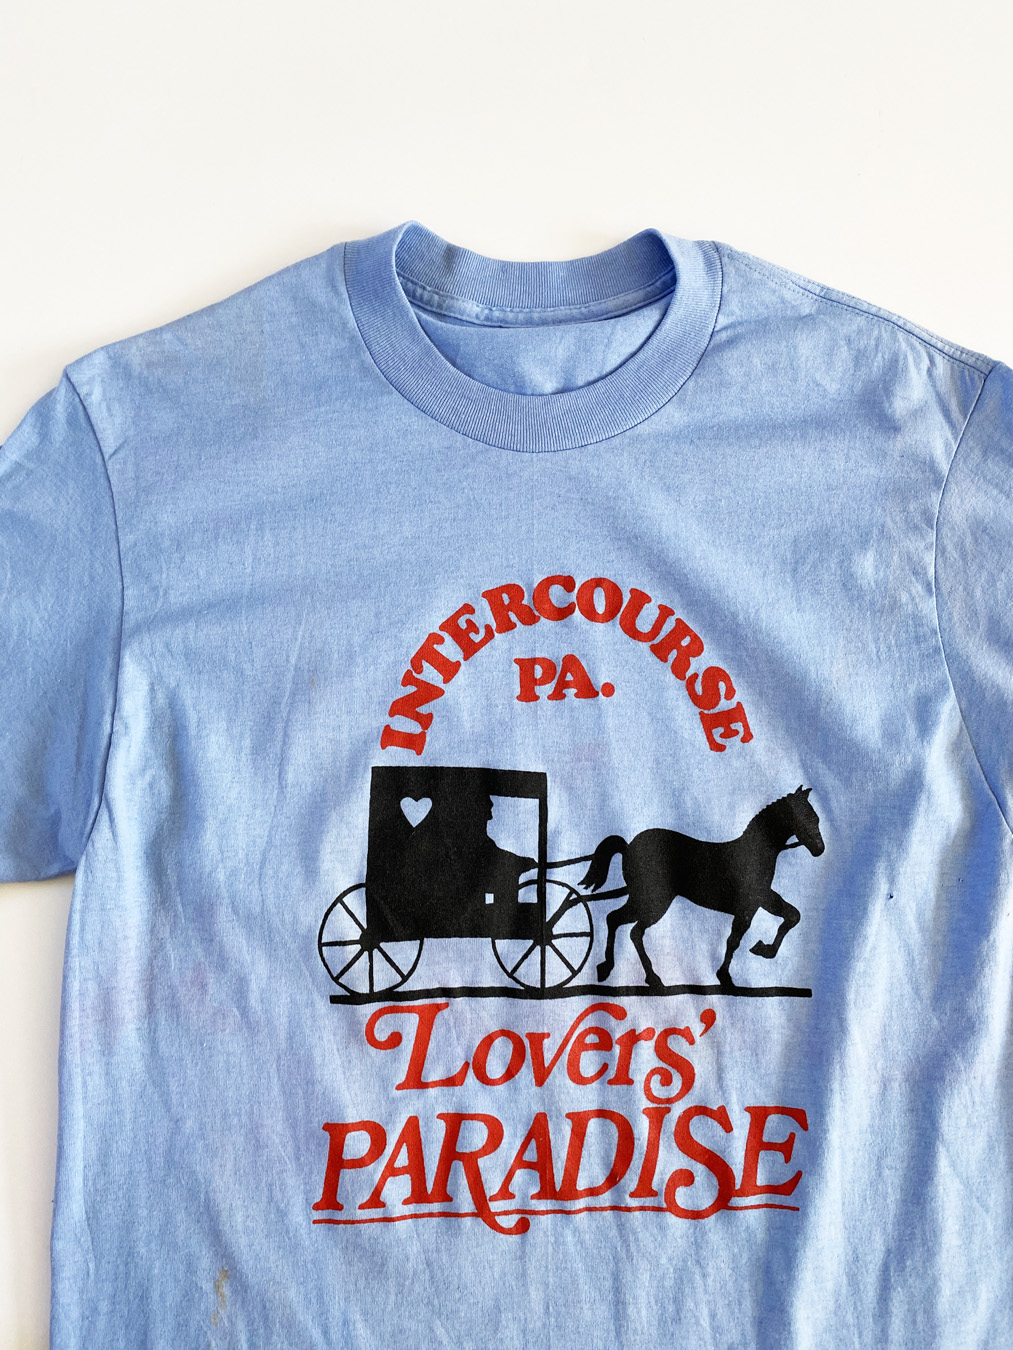 Vintage Intercourse, PA 'Lovers Paradise' Single Stitch T-Shirt